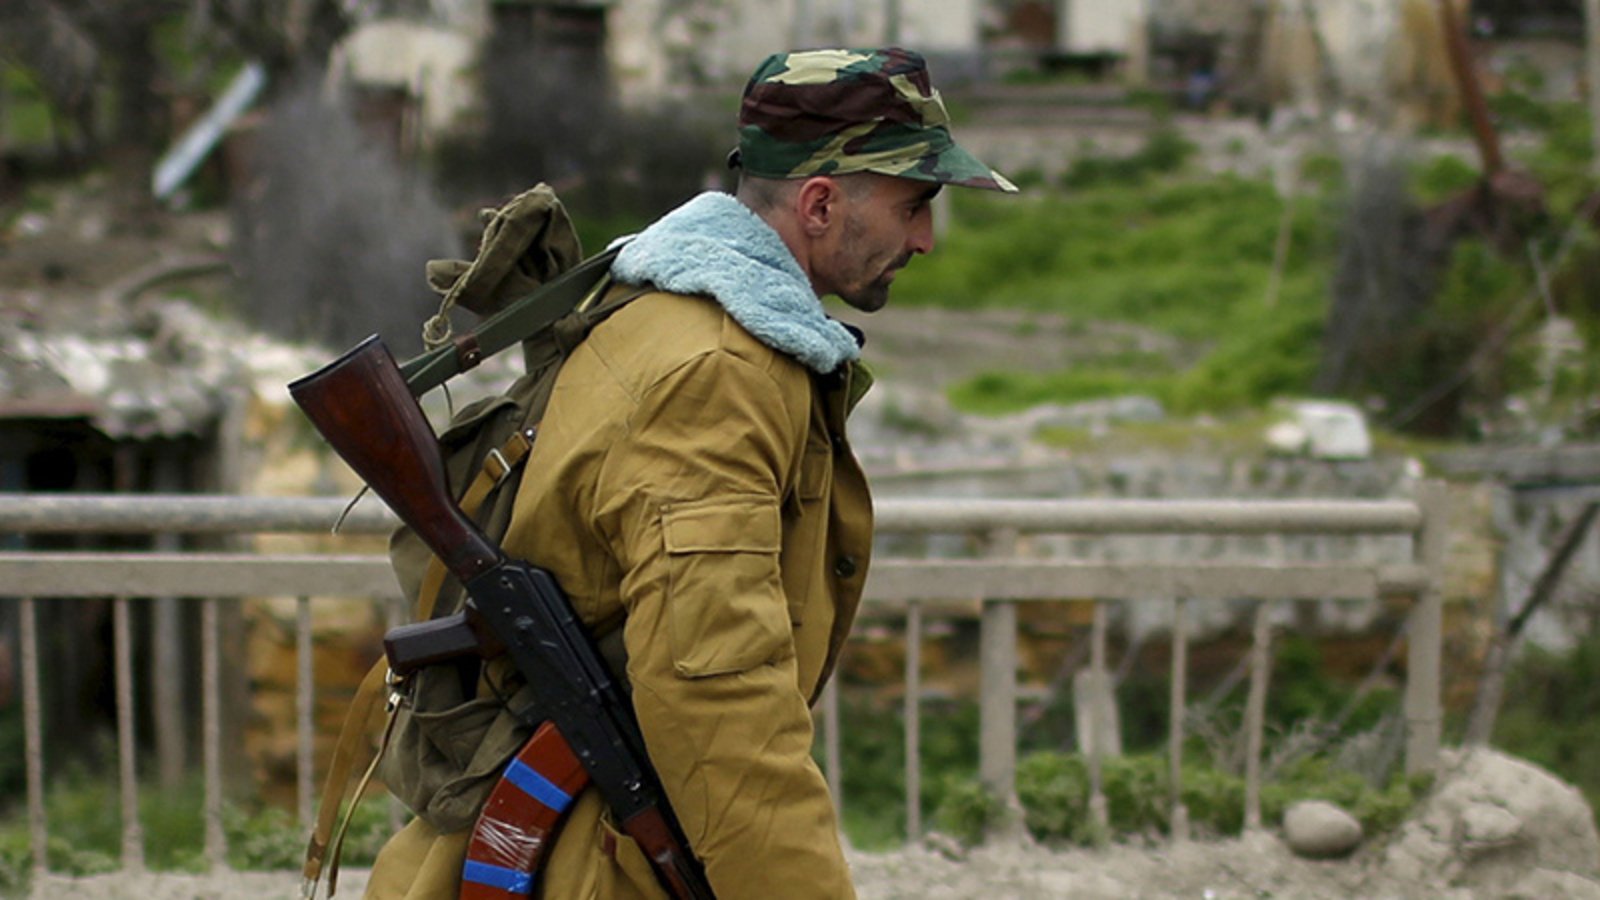 Armenia, Azerbaijan In War Of Words Over Turkey's Alleged Deployment Of  Syrian Rebels In Nagorno-Karabakh